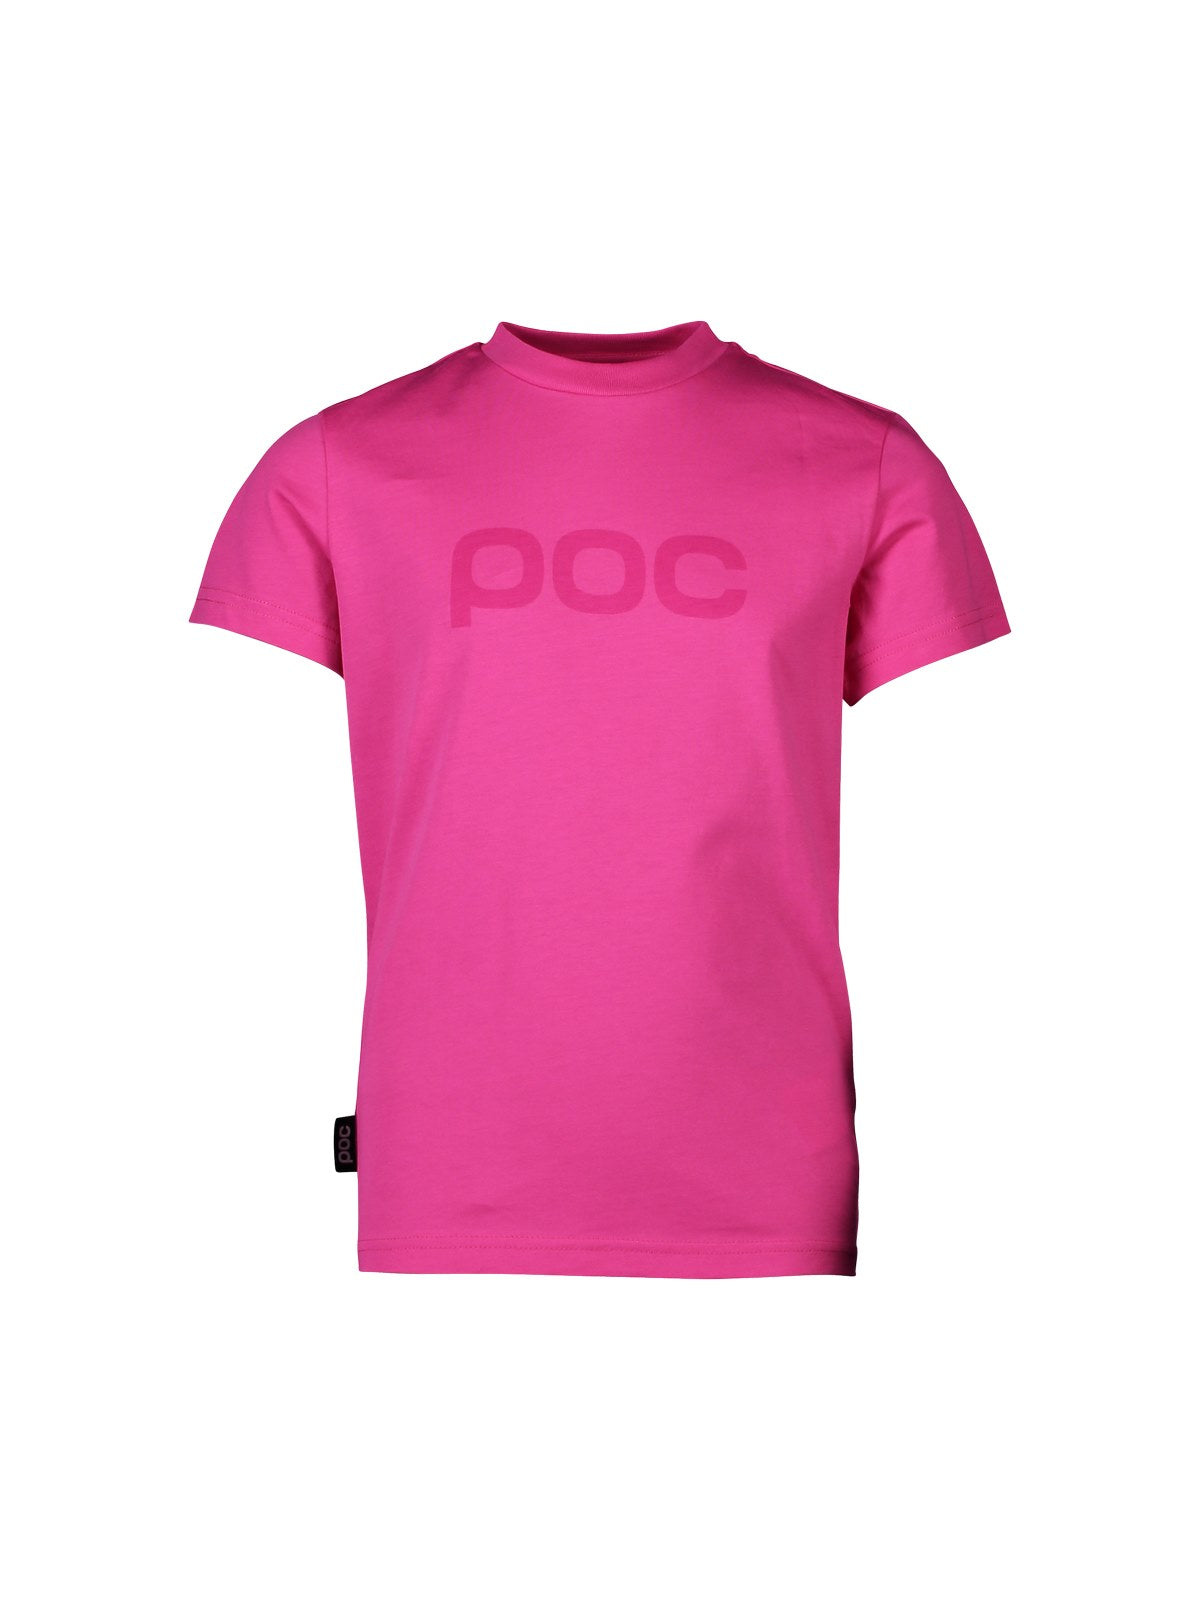 T-Shirt POC TEE JR - rózowy